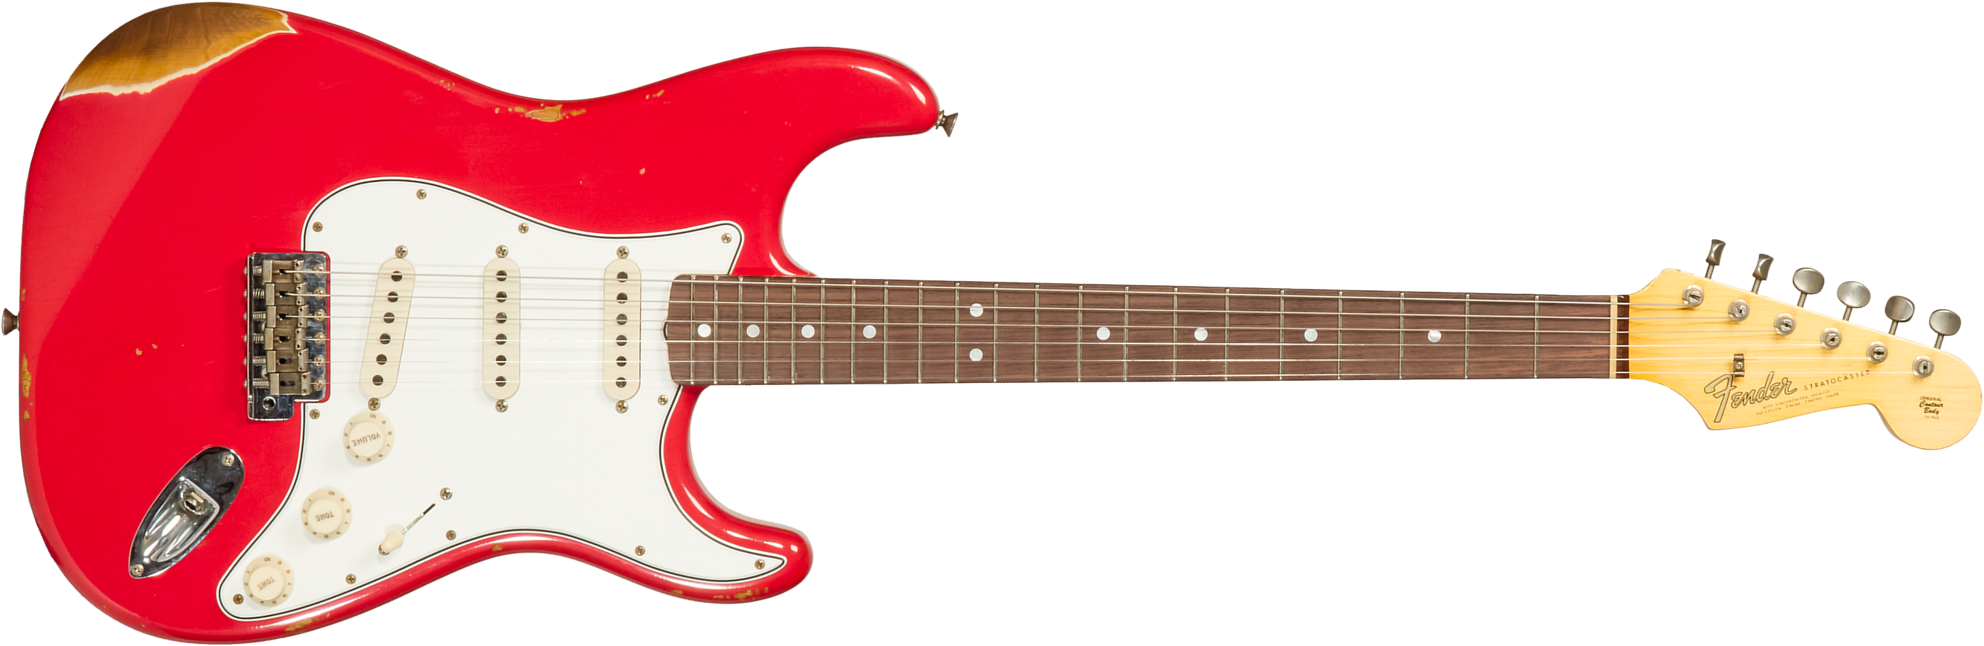 Fender Custom Shop Strat Late 1964 3s Trem Rw #cz568395 - Relic Aged Fiesta Red - Guitare Électrique Forme Str - Main picture